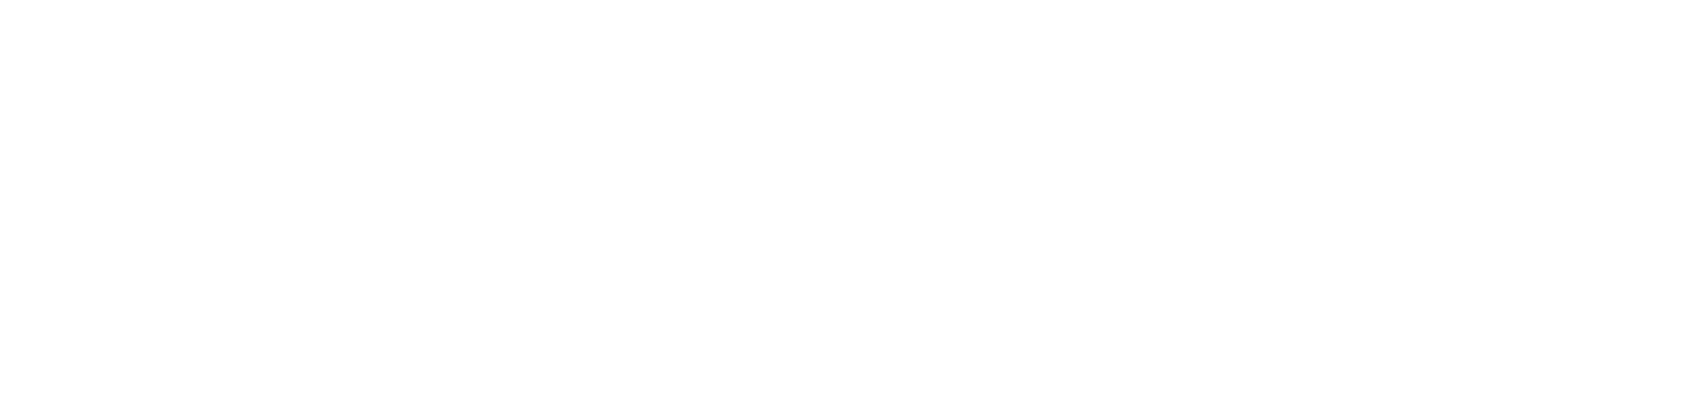 Walmart logo white